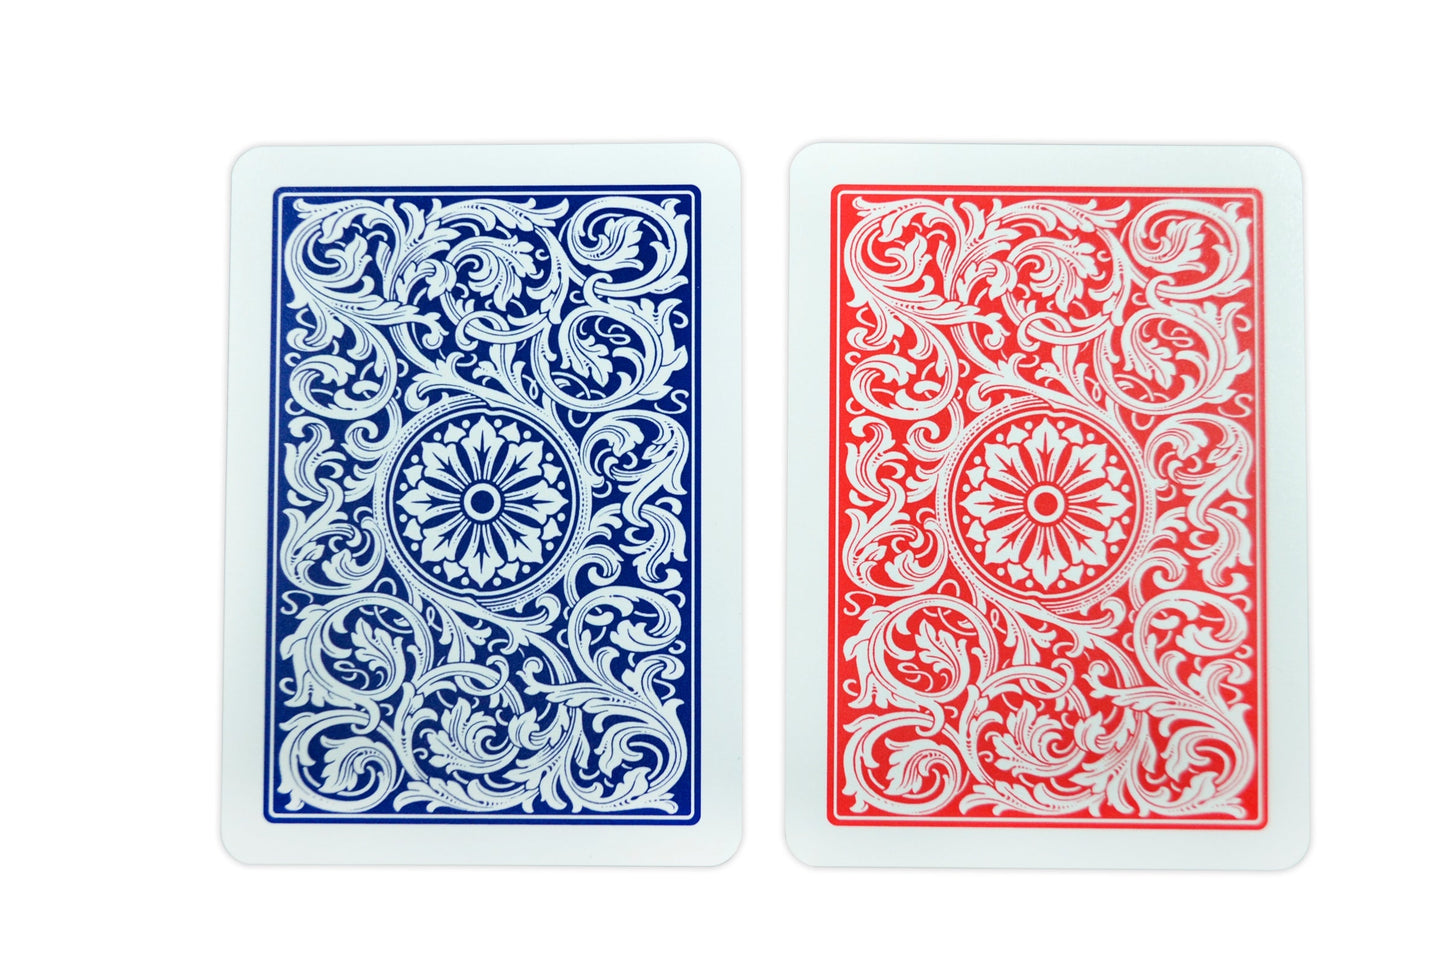 Copag Poker Size Jumbo UV Marked Cards | Poker Cheating Devices